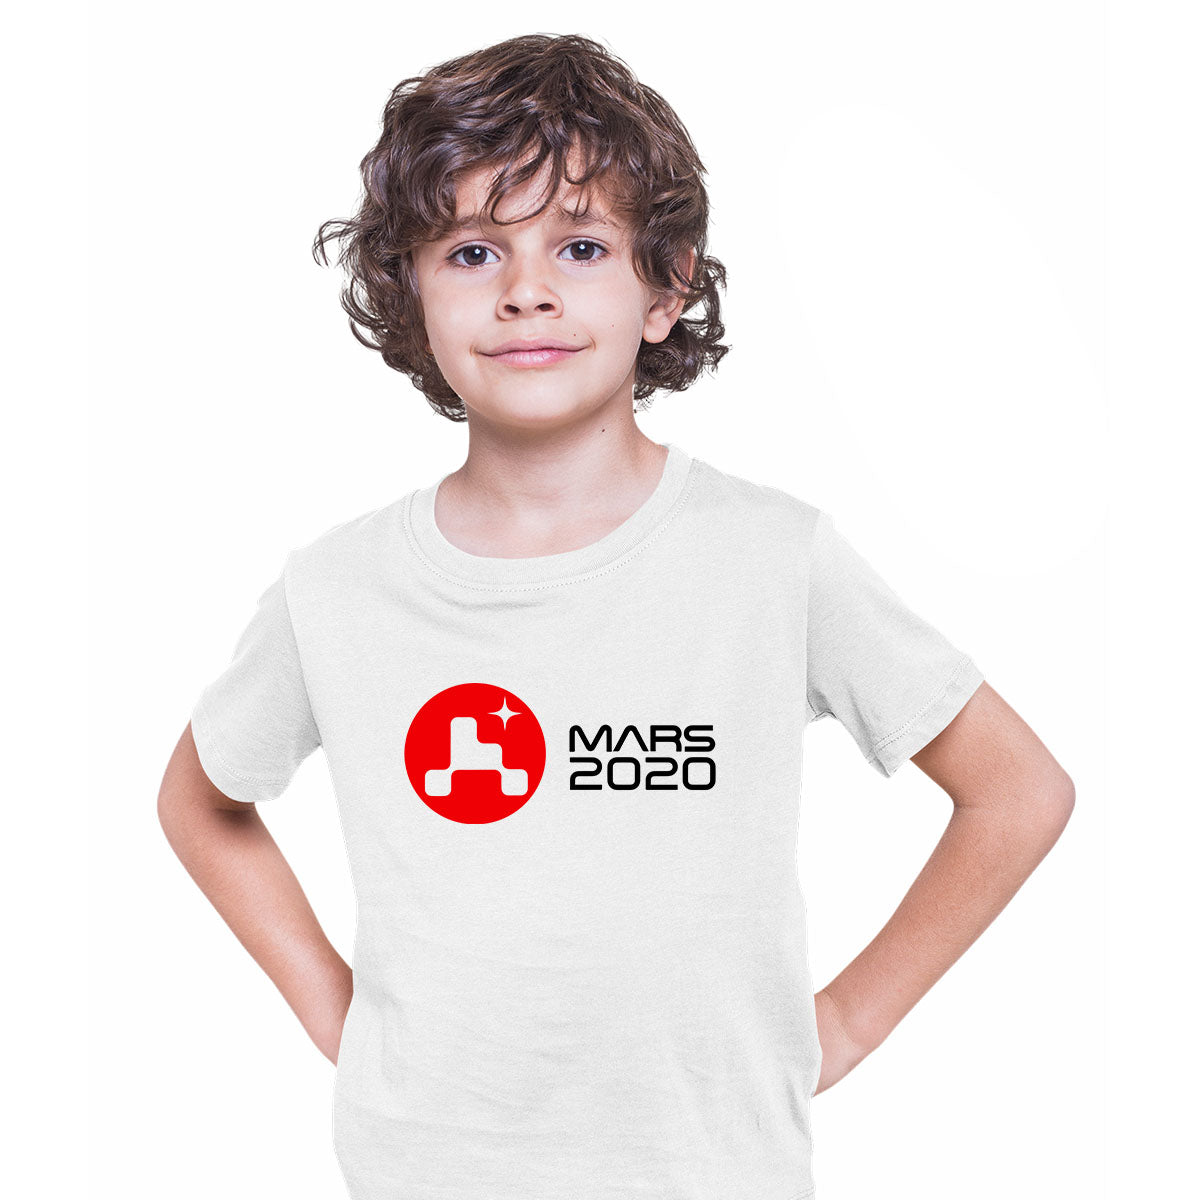 Mars Landing 2021 T-Shirt Space Nasa perseverance Tee Red Planet T-shirt for Kids - Kuzi Tees